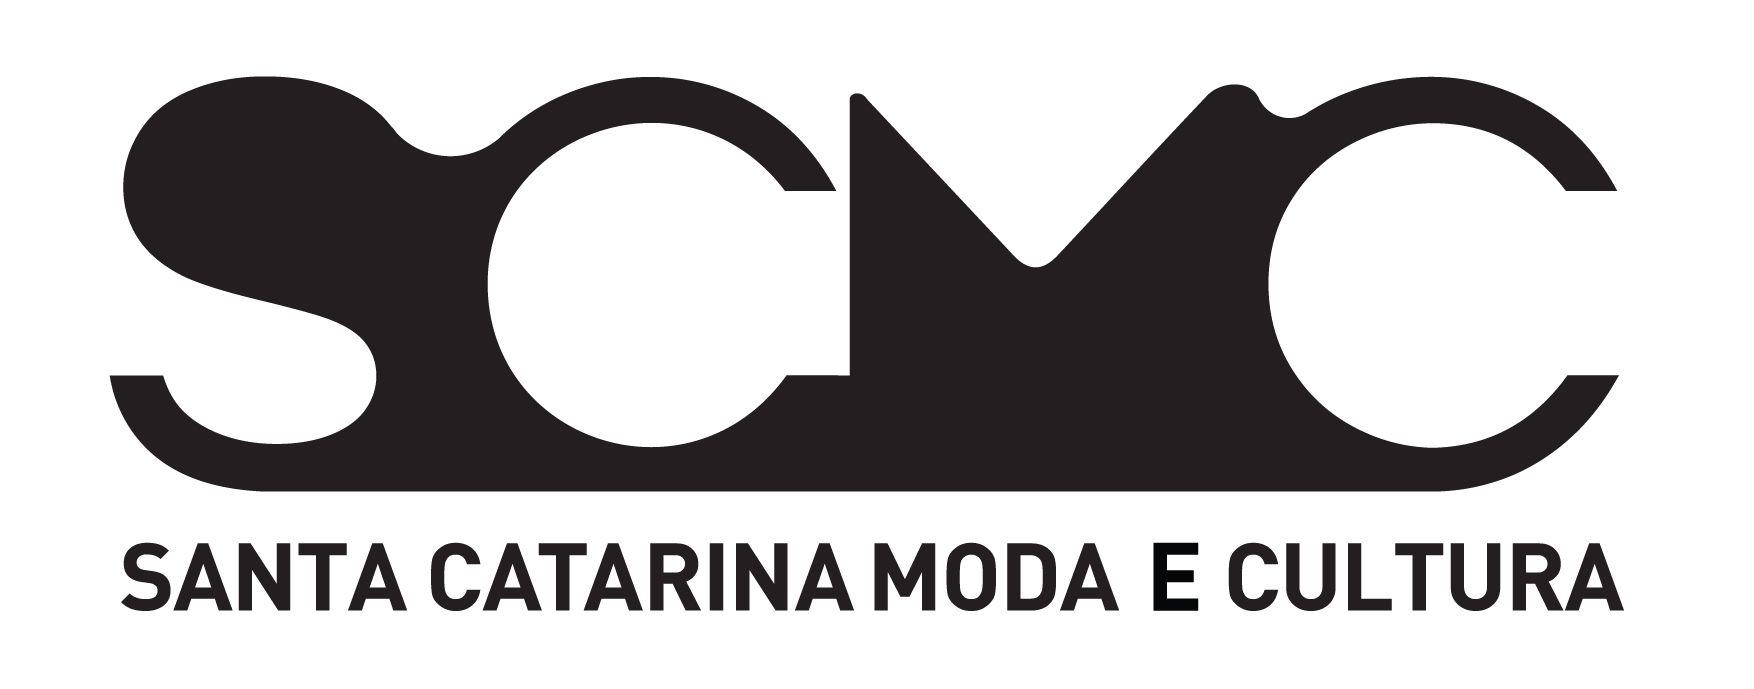 Scmc Logo - Index of /wp-content/uploads/2013/04